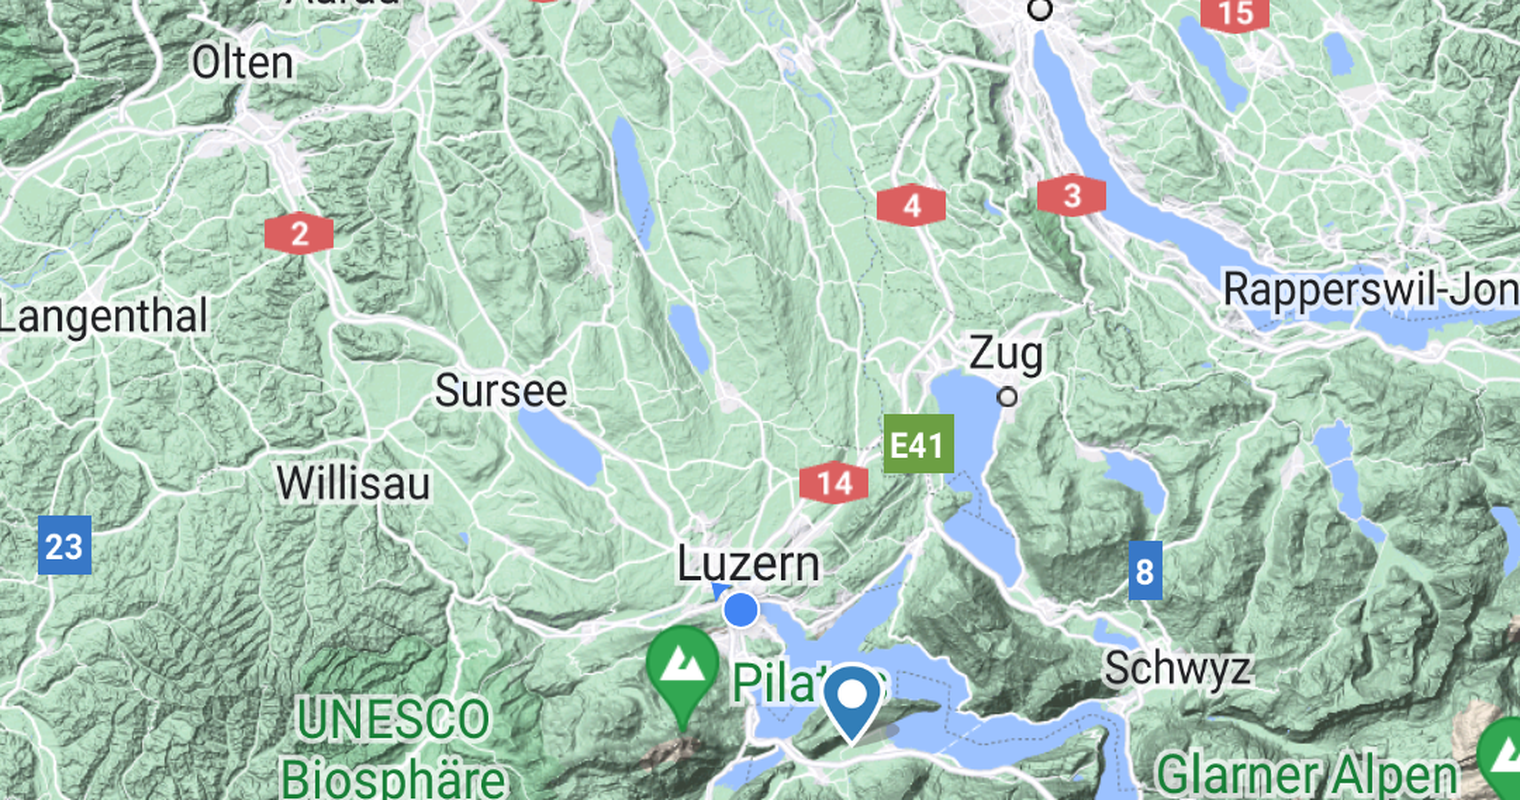 Störung bei Skyguide: Schweizer Luftraum komplett gesperrt